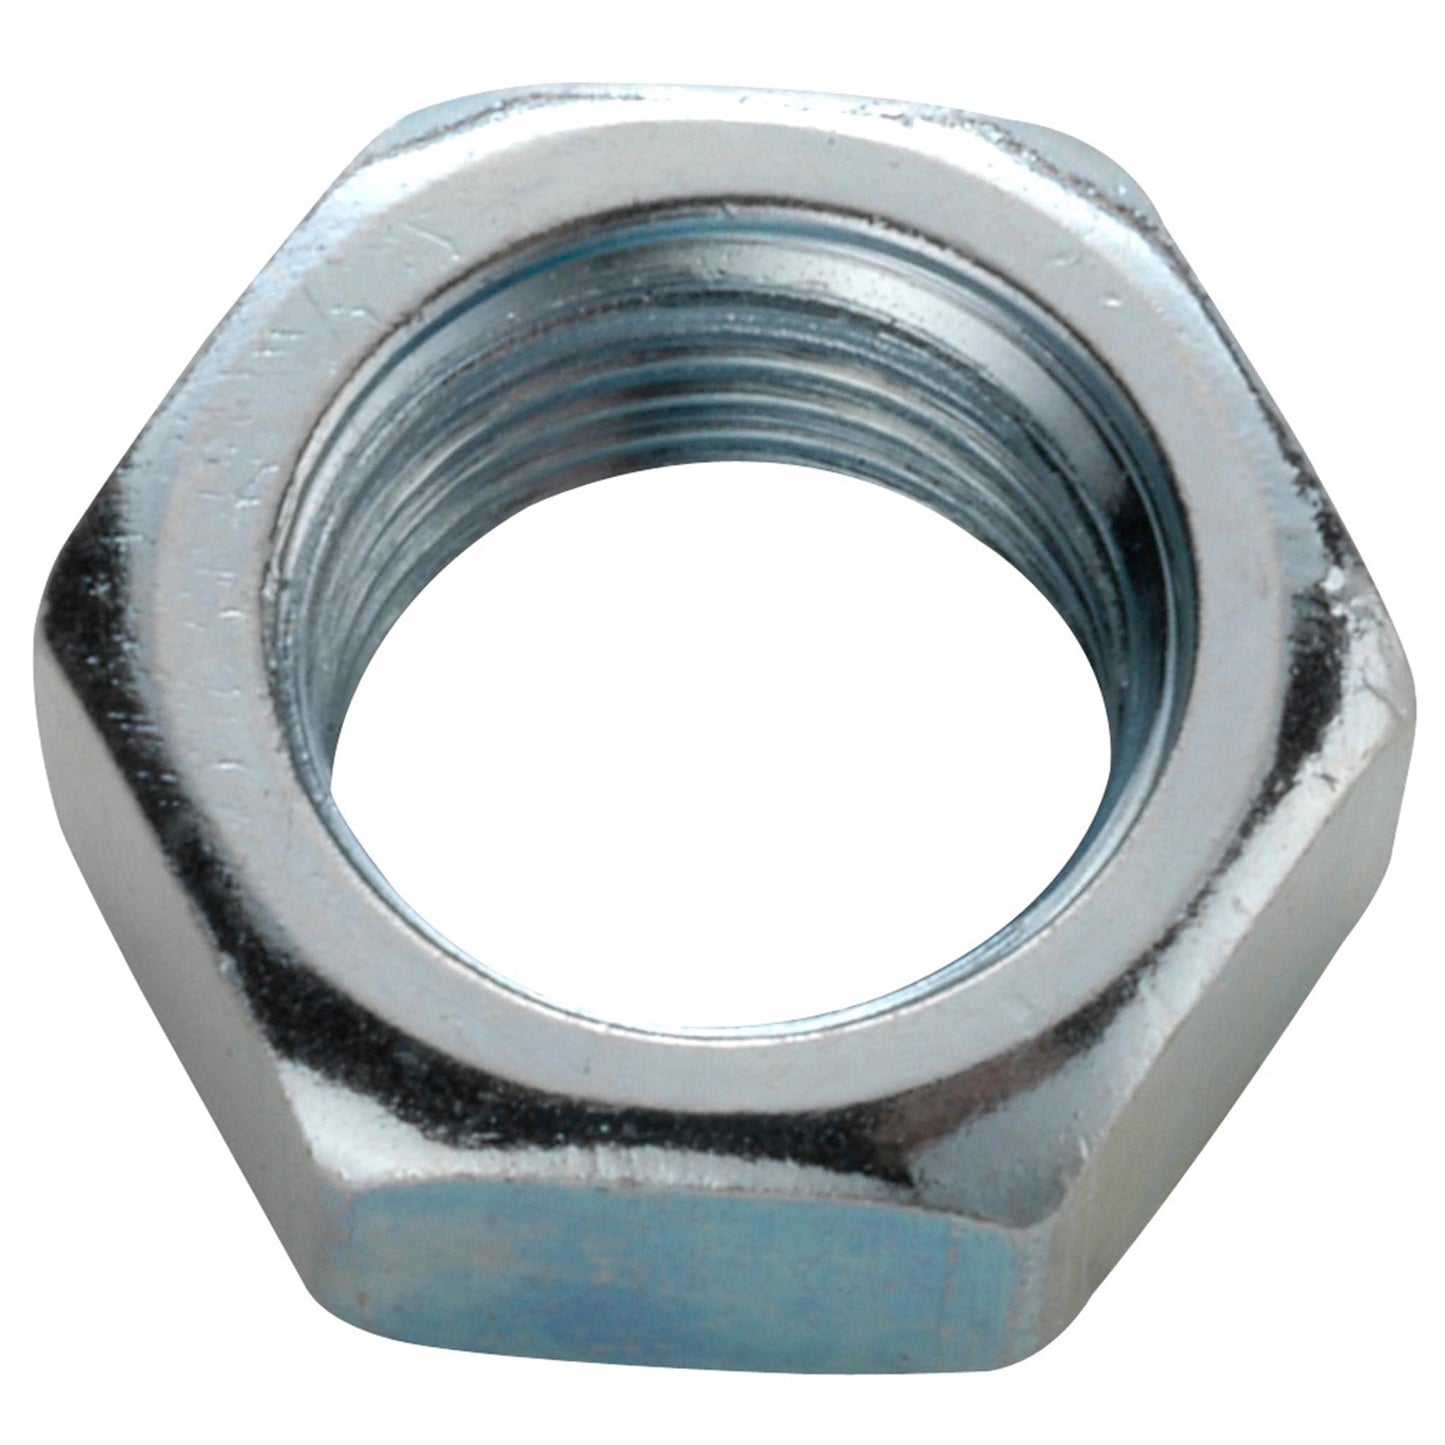 Axle nuts FG 7.9 VR galvanized steel